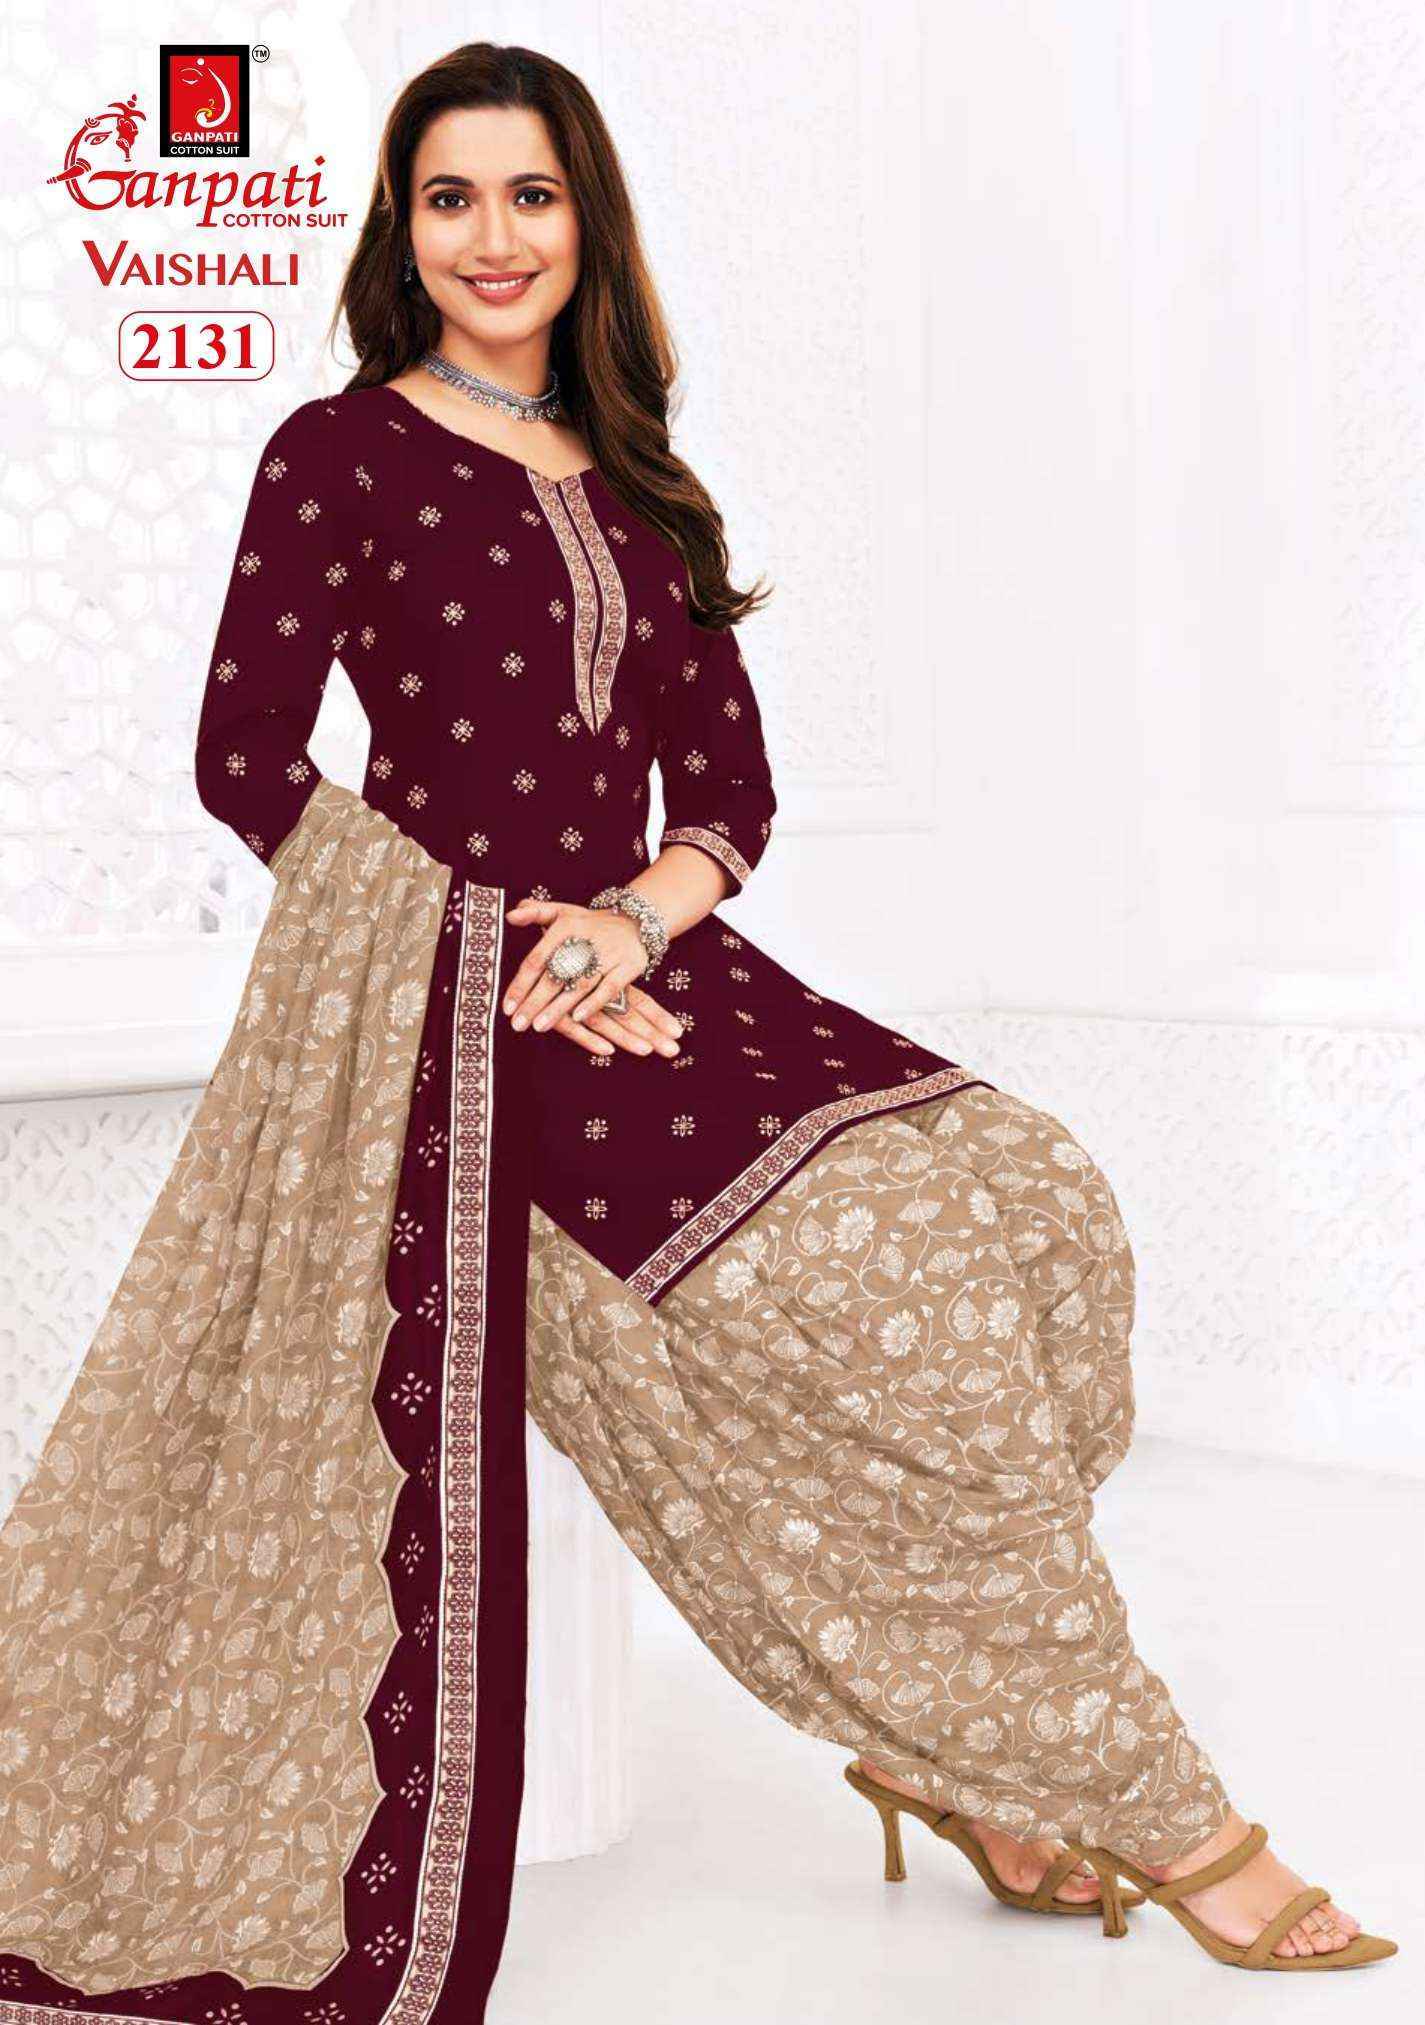 Ganpati Vaishali Vol-7 Cotton Dress Material Wholesale Online Shopping